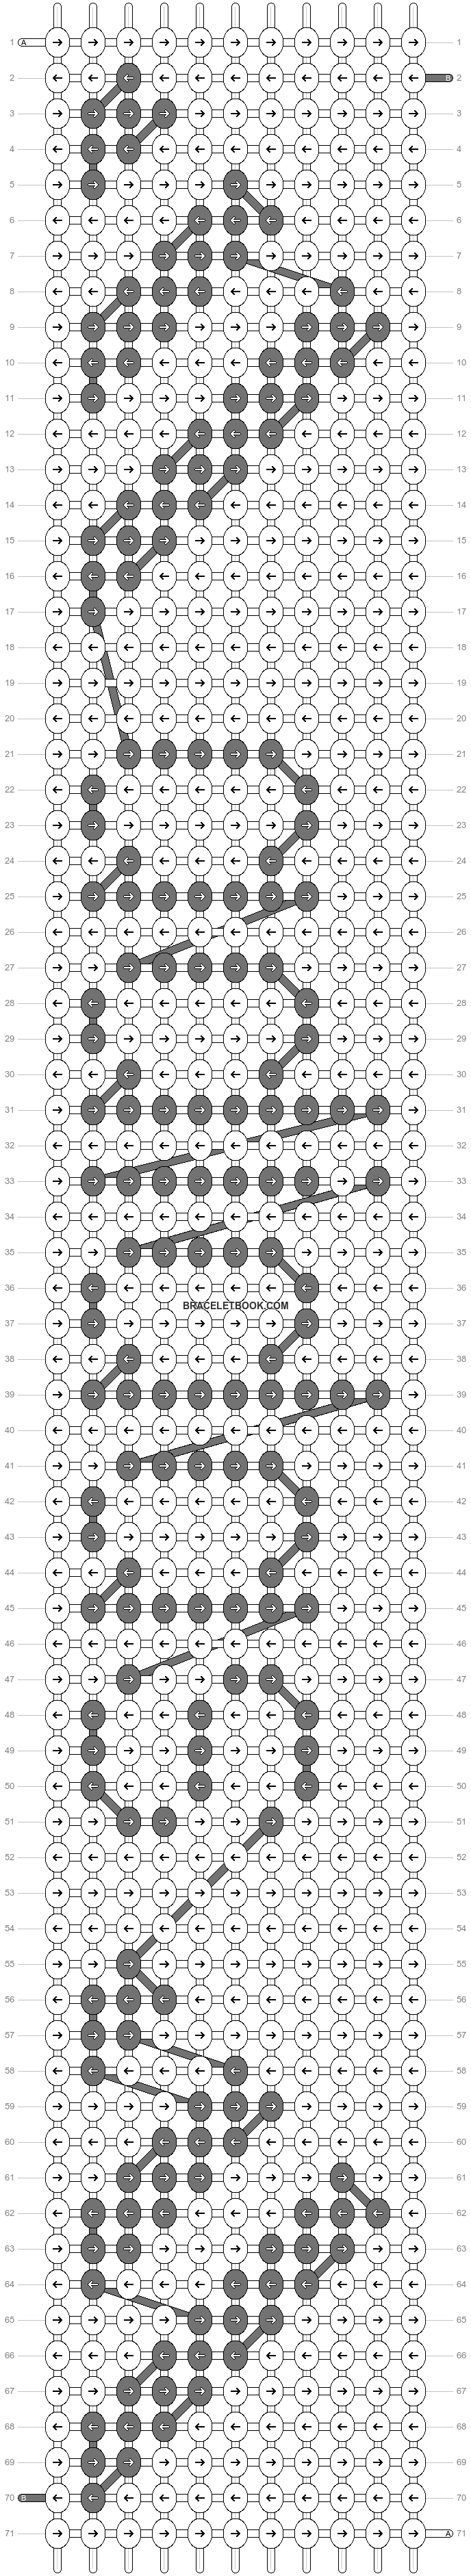 Alpha pattern #15132 variation #30837 pattern